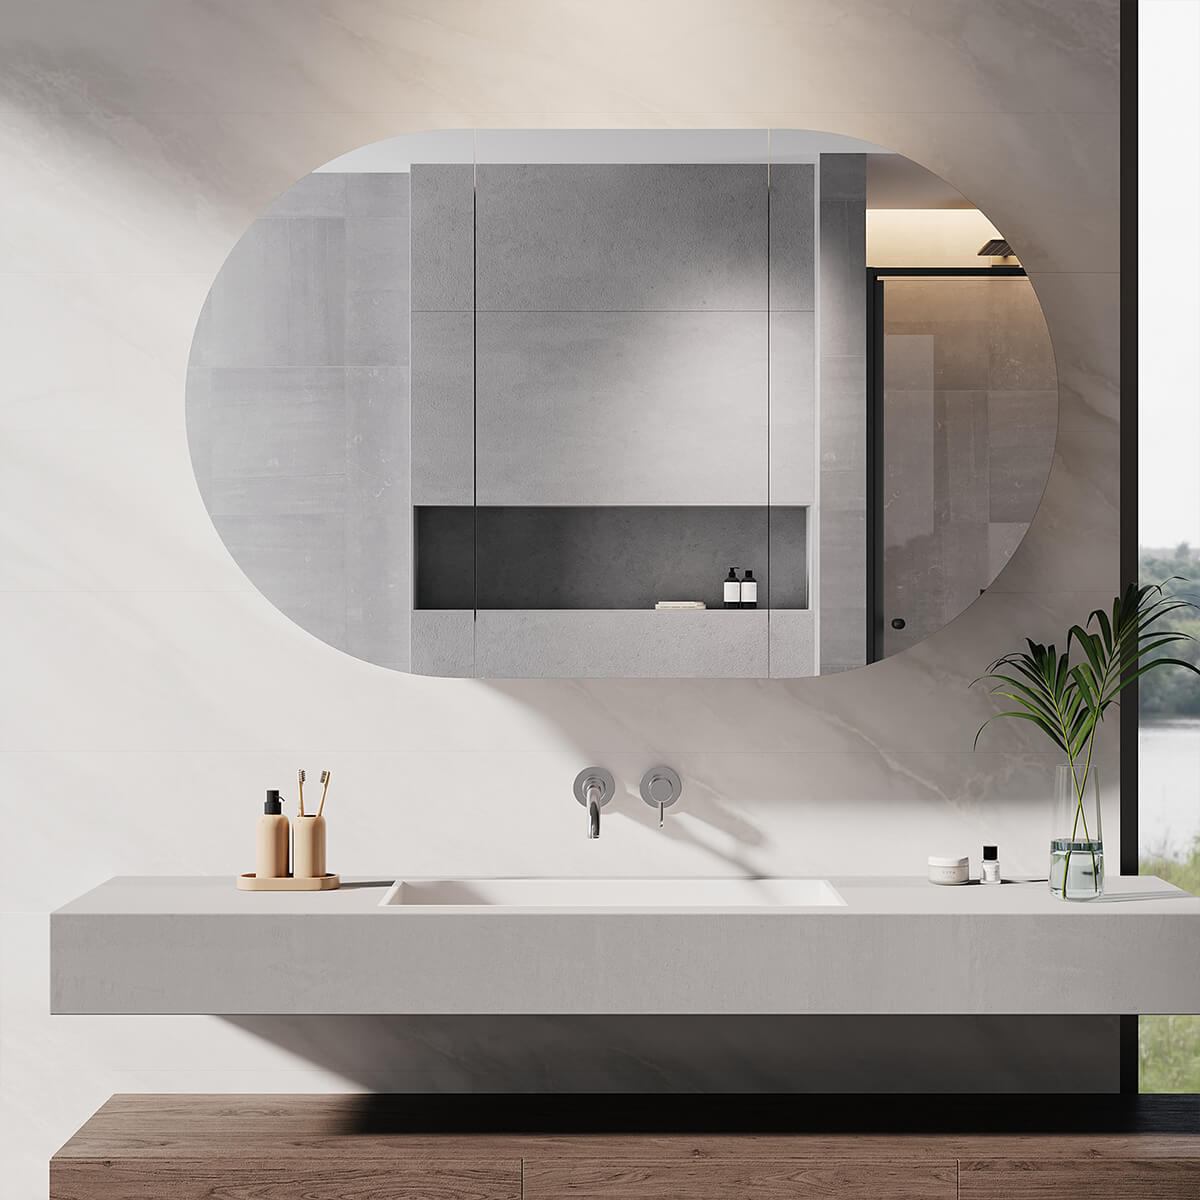 Oval Mirror Cabinet Medicine Shaving Bathroom Wall Hung or In-wall 1200x750mm Black - Elegant Showers AU